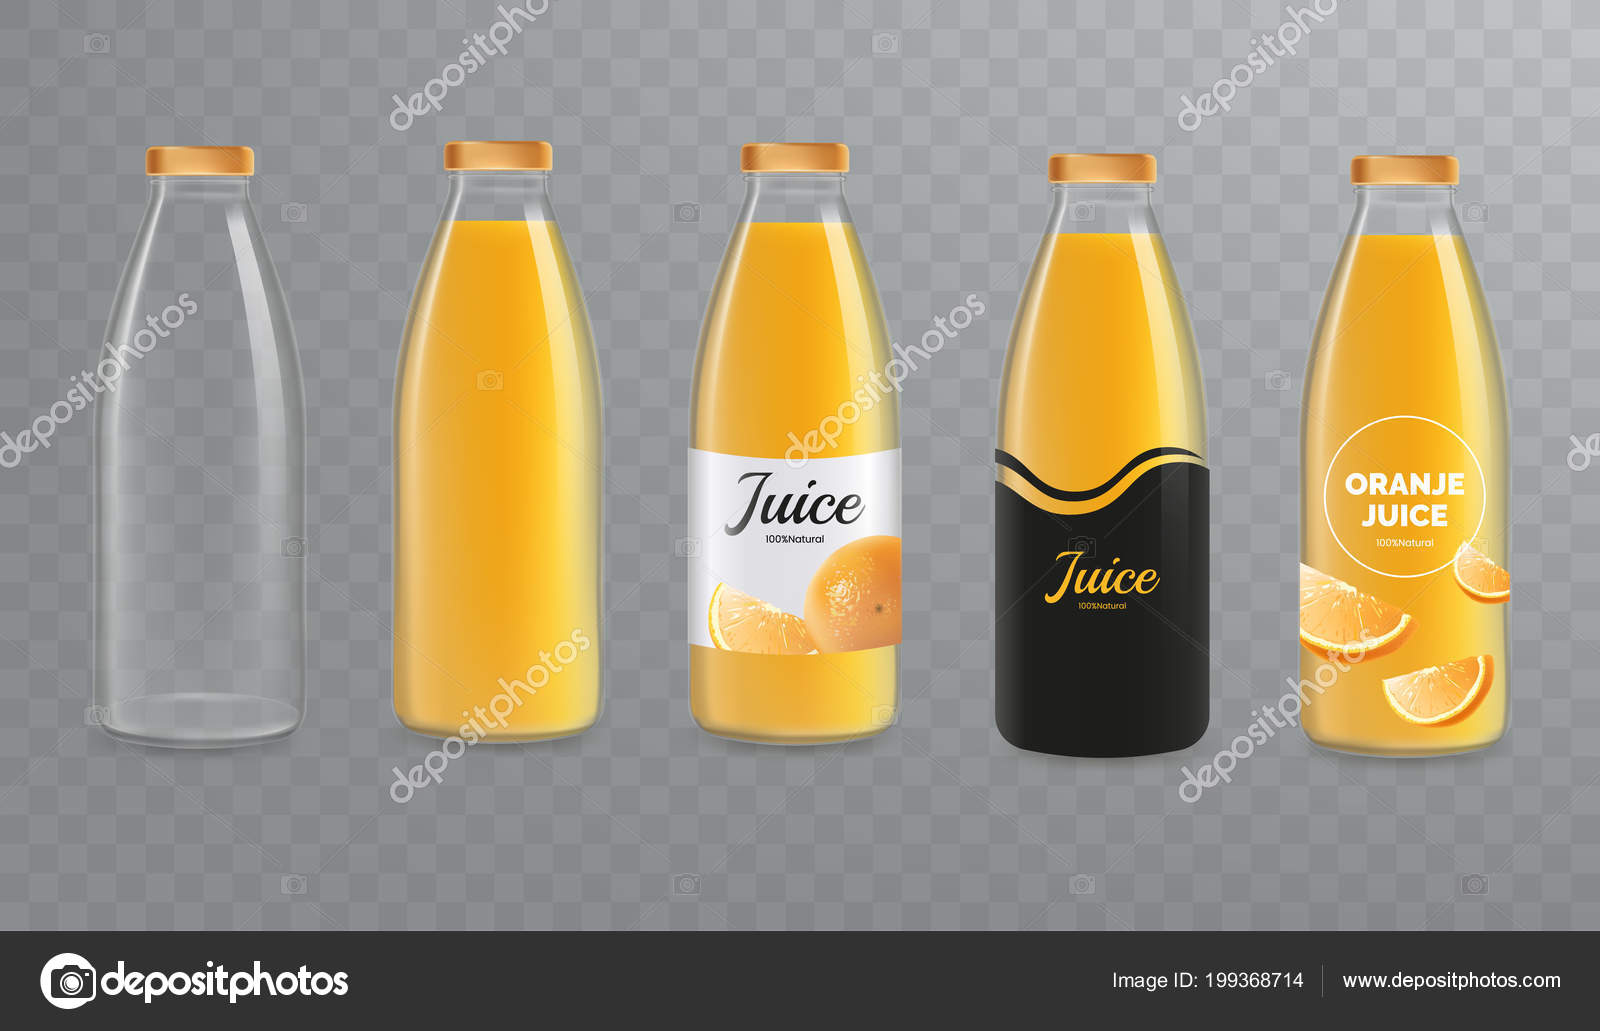 https://st4.depositphotos.com/11779022/19936/v/1600/depositphotos_199368714-stock-illustration-orange-juice-bottle-mockup-vector.jpg